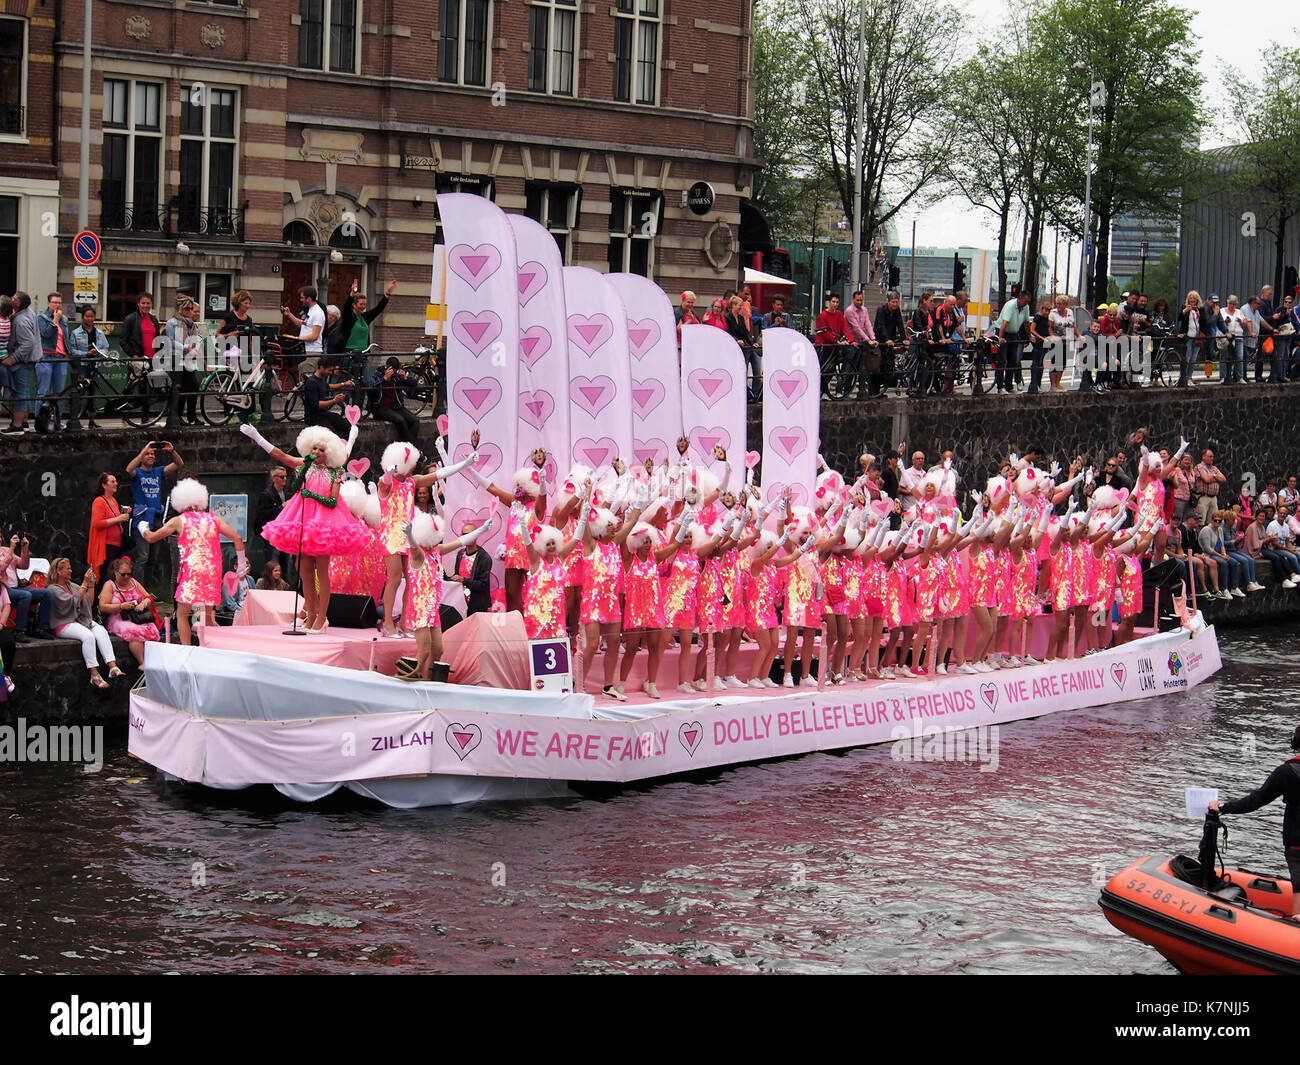 3 barco Dolly Bellefleur & Friends, Canal Parade Amsterdam 2017 Foto 1 Foto de stock